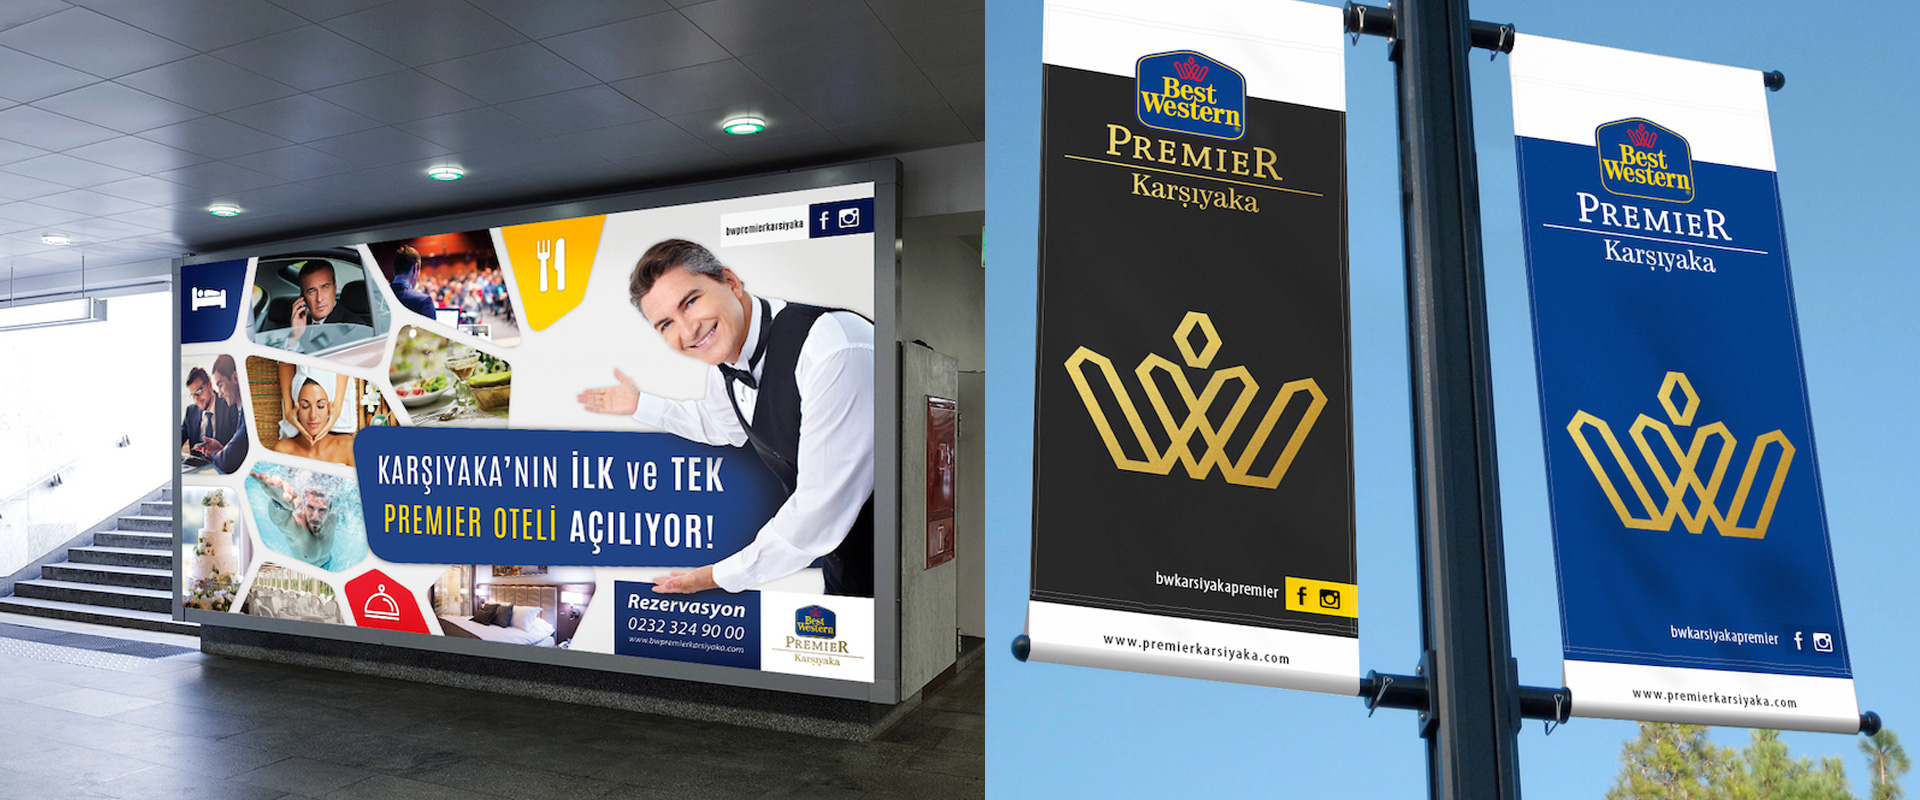 Best Western Premier - KONSEPTIZ Advertising Agency in Turkey